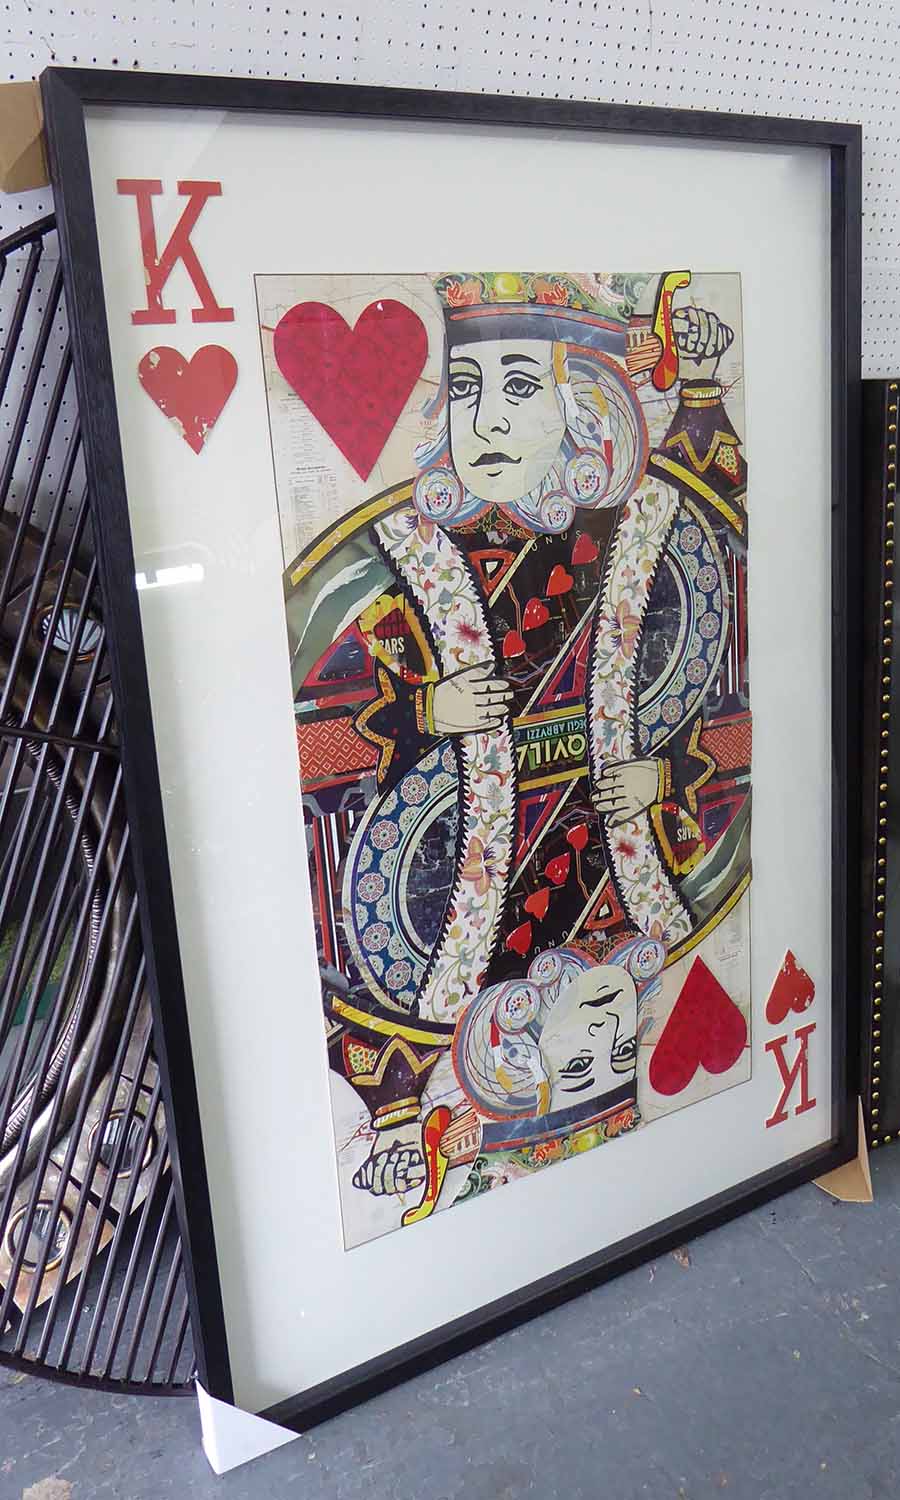 KING OF HEARTS, contemporary school decoupage, 145cm x 100cm.